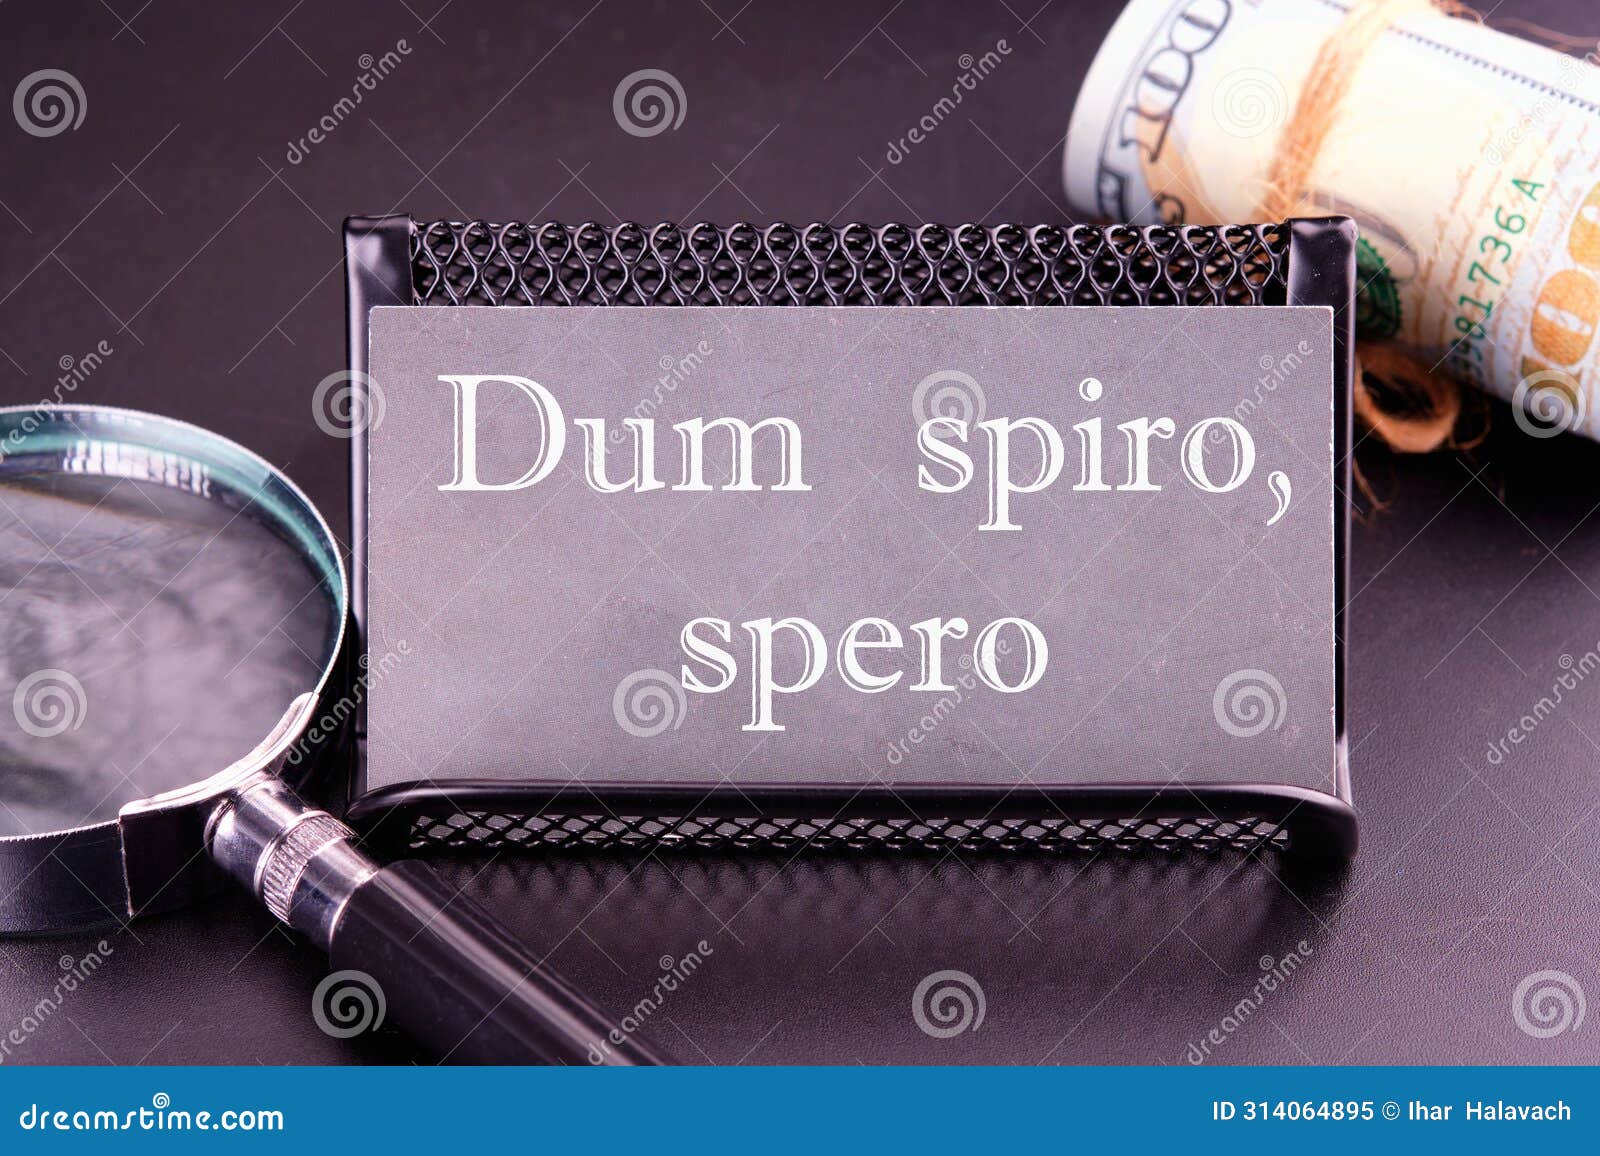 dum spiro spero - latin phrase means while i breath, i hope. on the business card